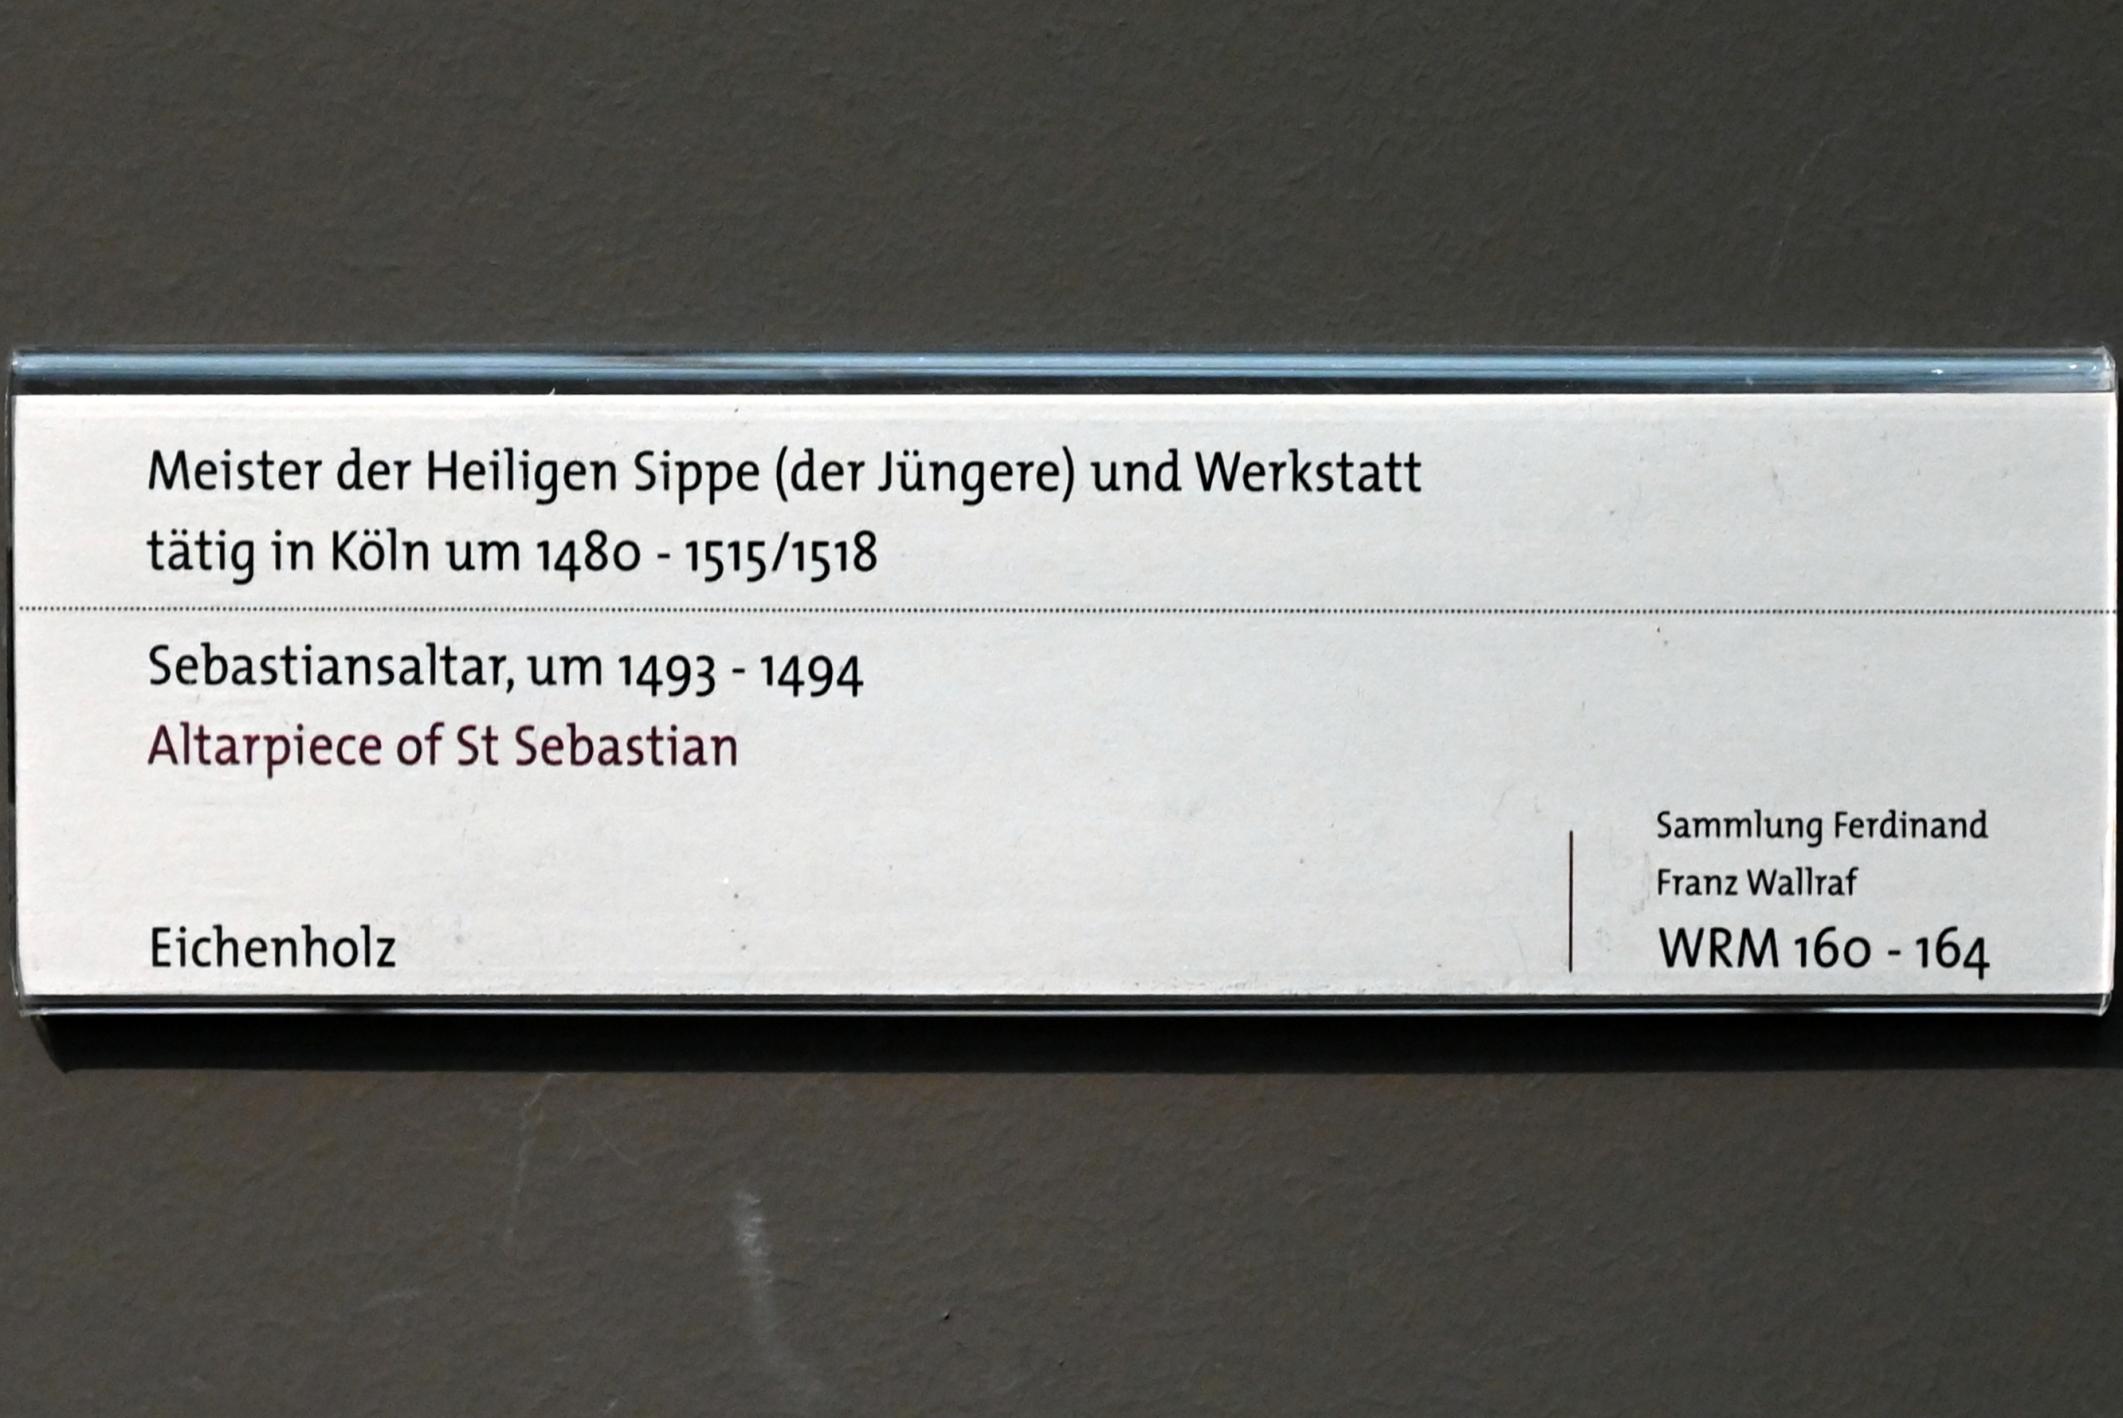 Jüngerer Meister der Heiligen Sippe (1480–1514), Sebastiansaltar, Köln, Wallraf-Richartz-Museum, Mittelalter - Saal 2, um 1493–1494, Bild 4/4